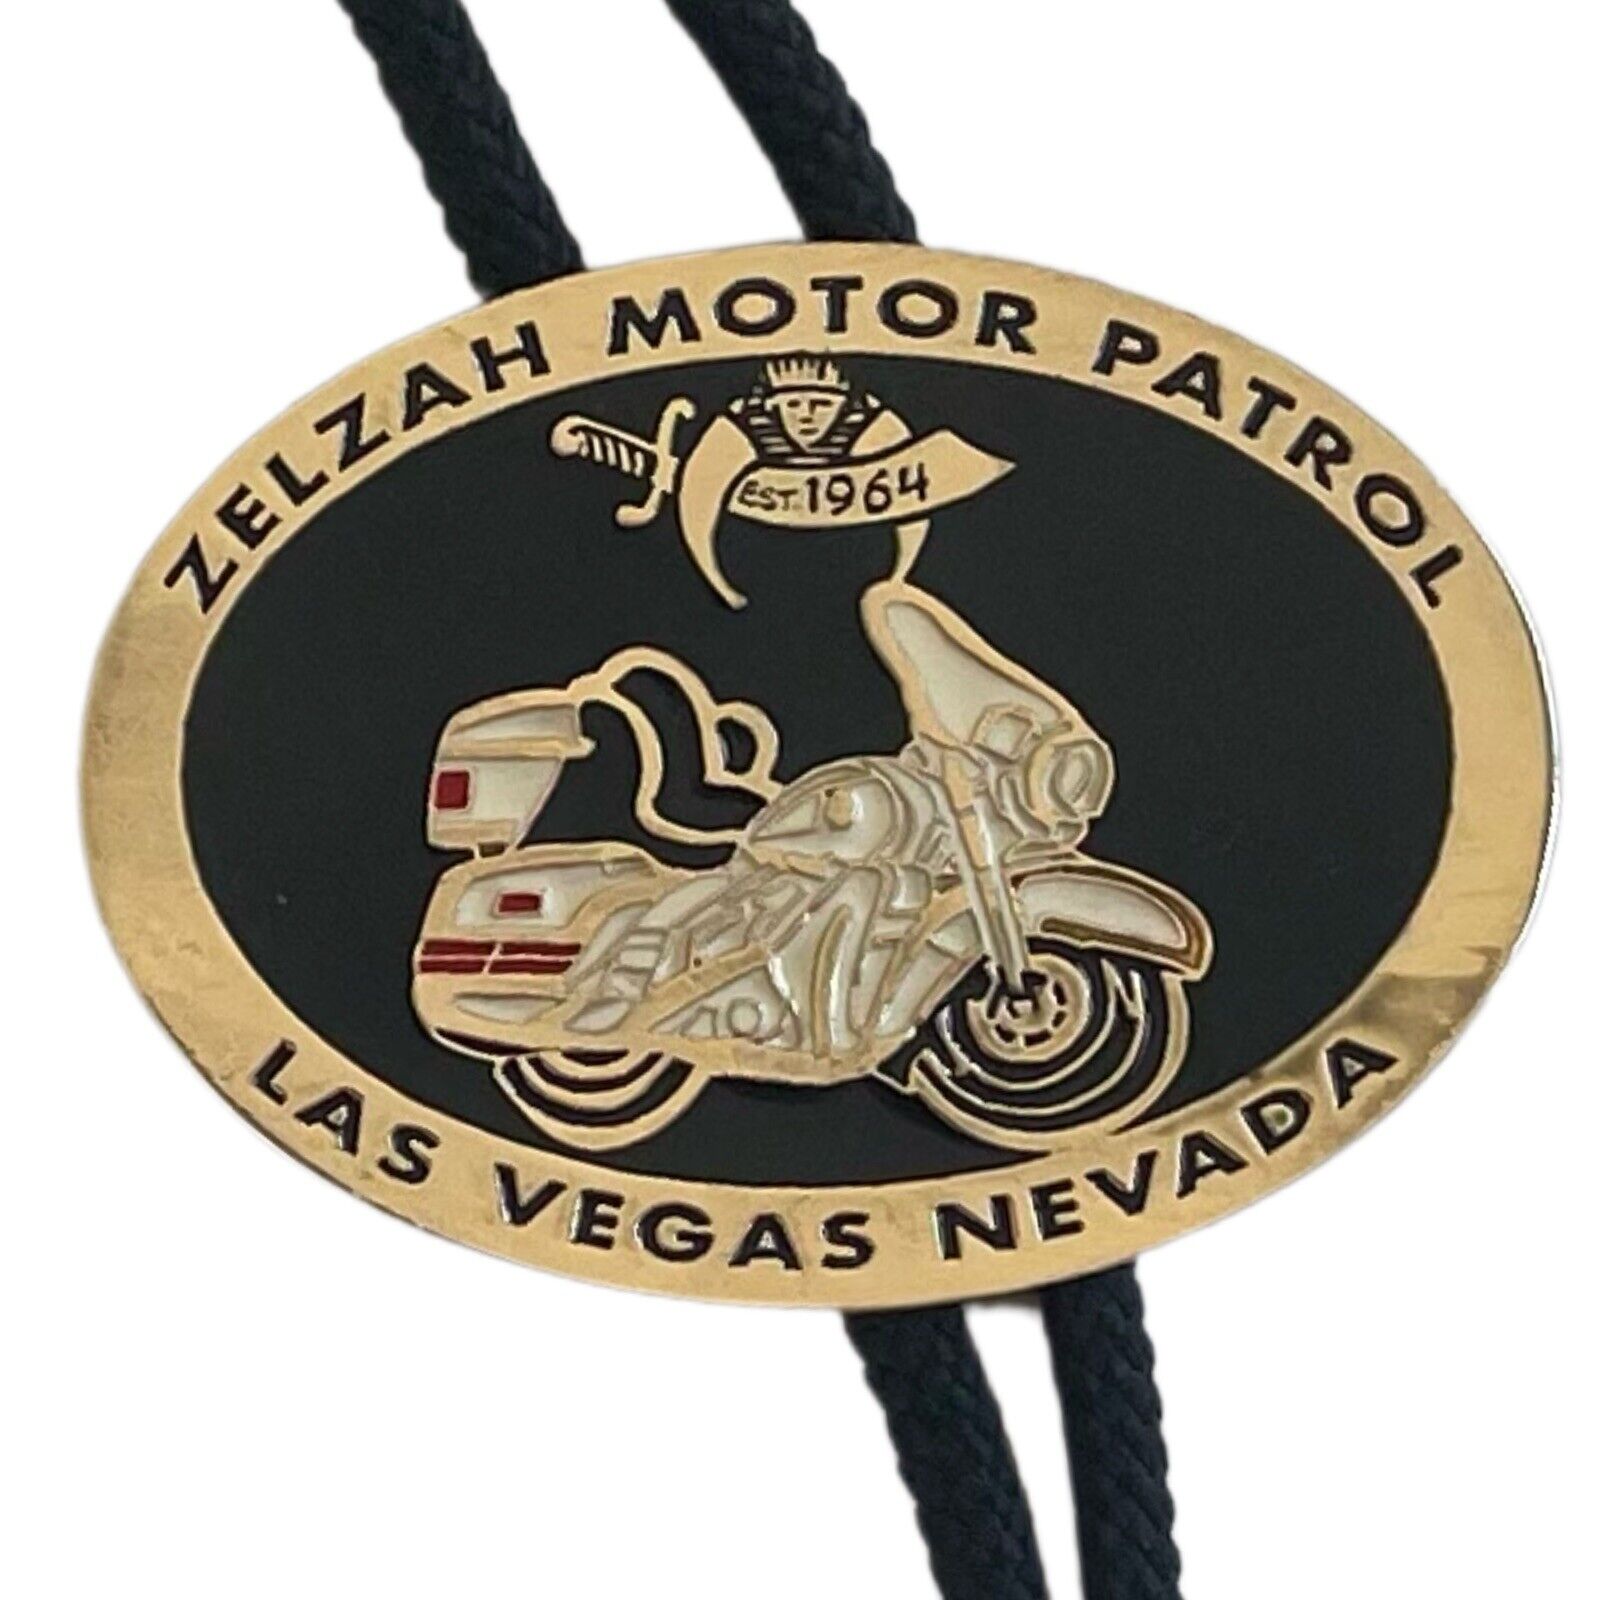 Vintage Masonic Shriner Zelzah Motor Patrol Las Vegas Nevada Motorcycle est 1964